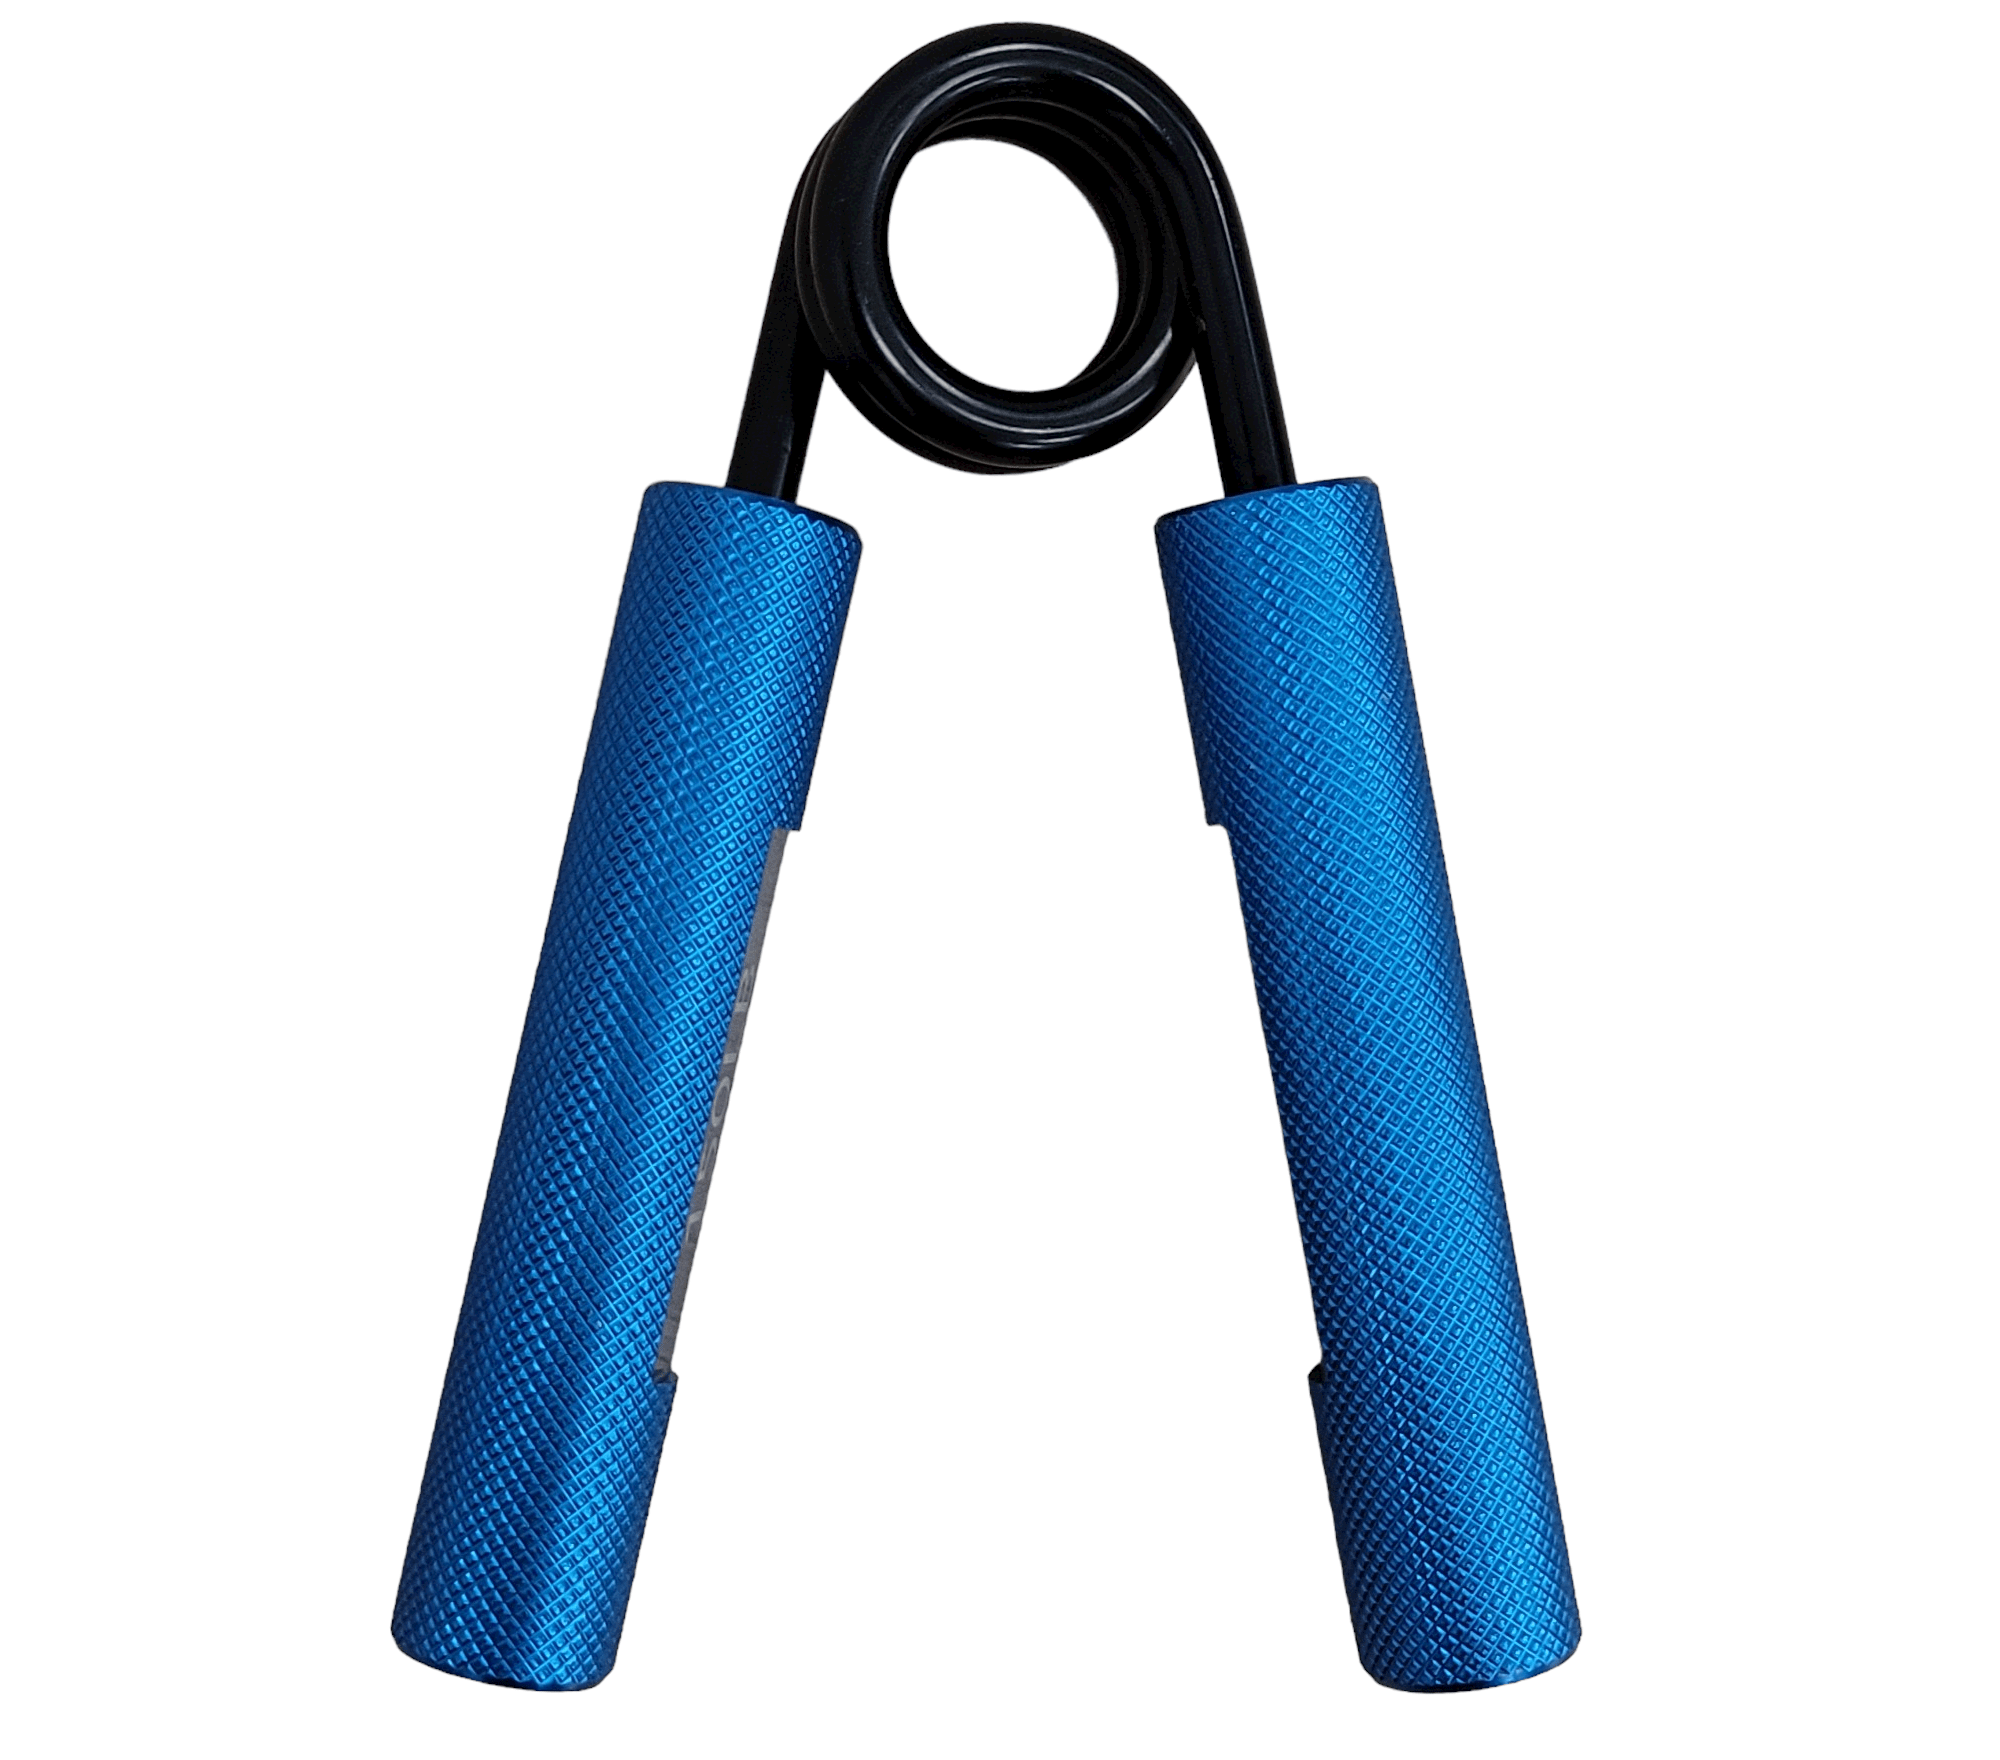 MD Buddy Aluminum Hand Grip Exerciser - Blue (150 LB)-150lbs Grip Strength-MD Buddy-1